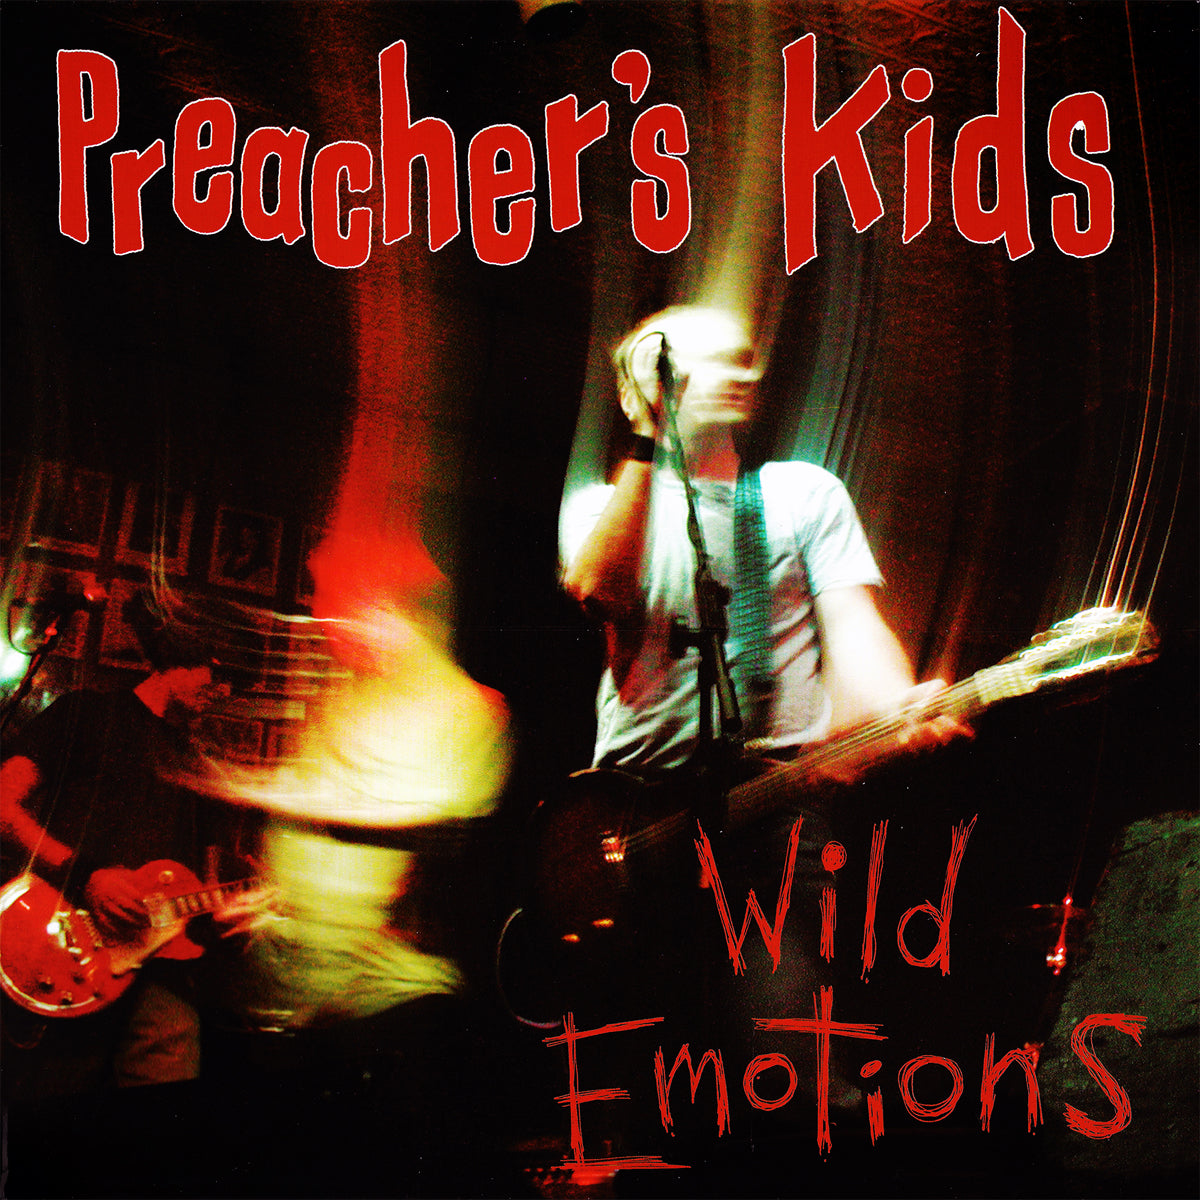 Preacher’s Kids- Wild Emotions LP ~REAL KIDS!